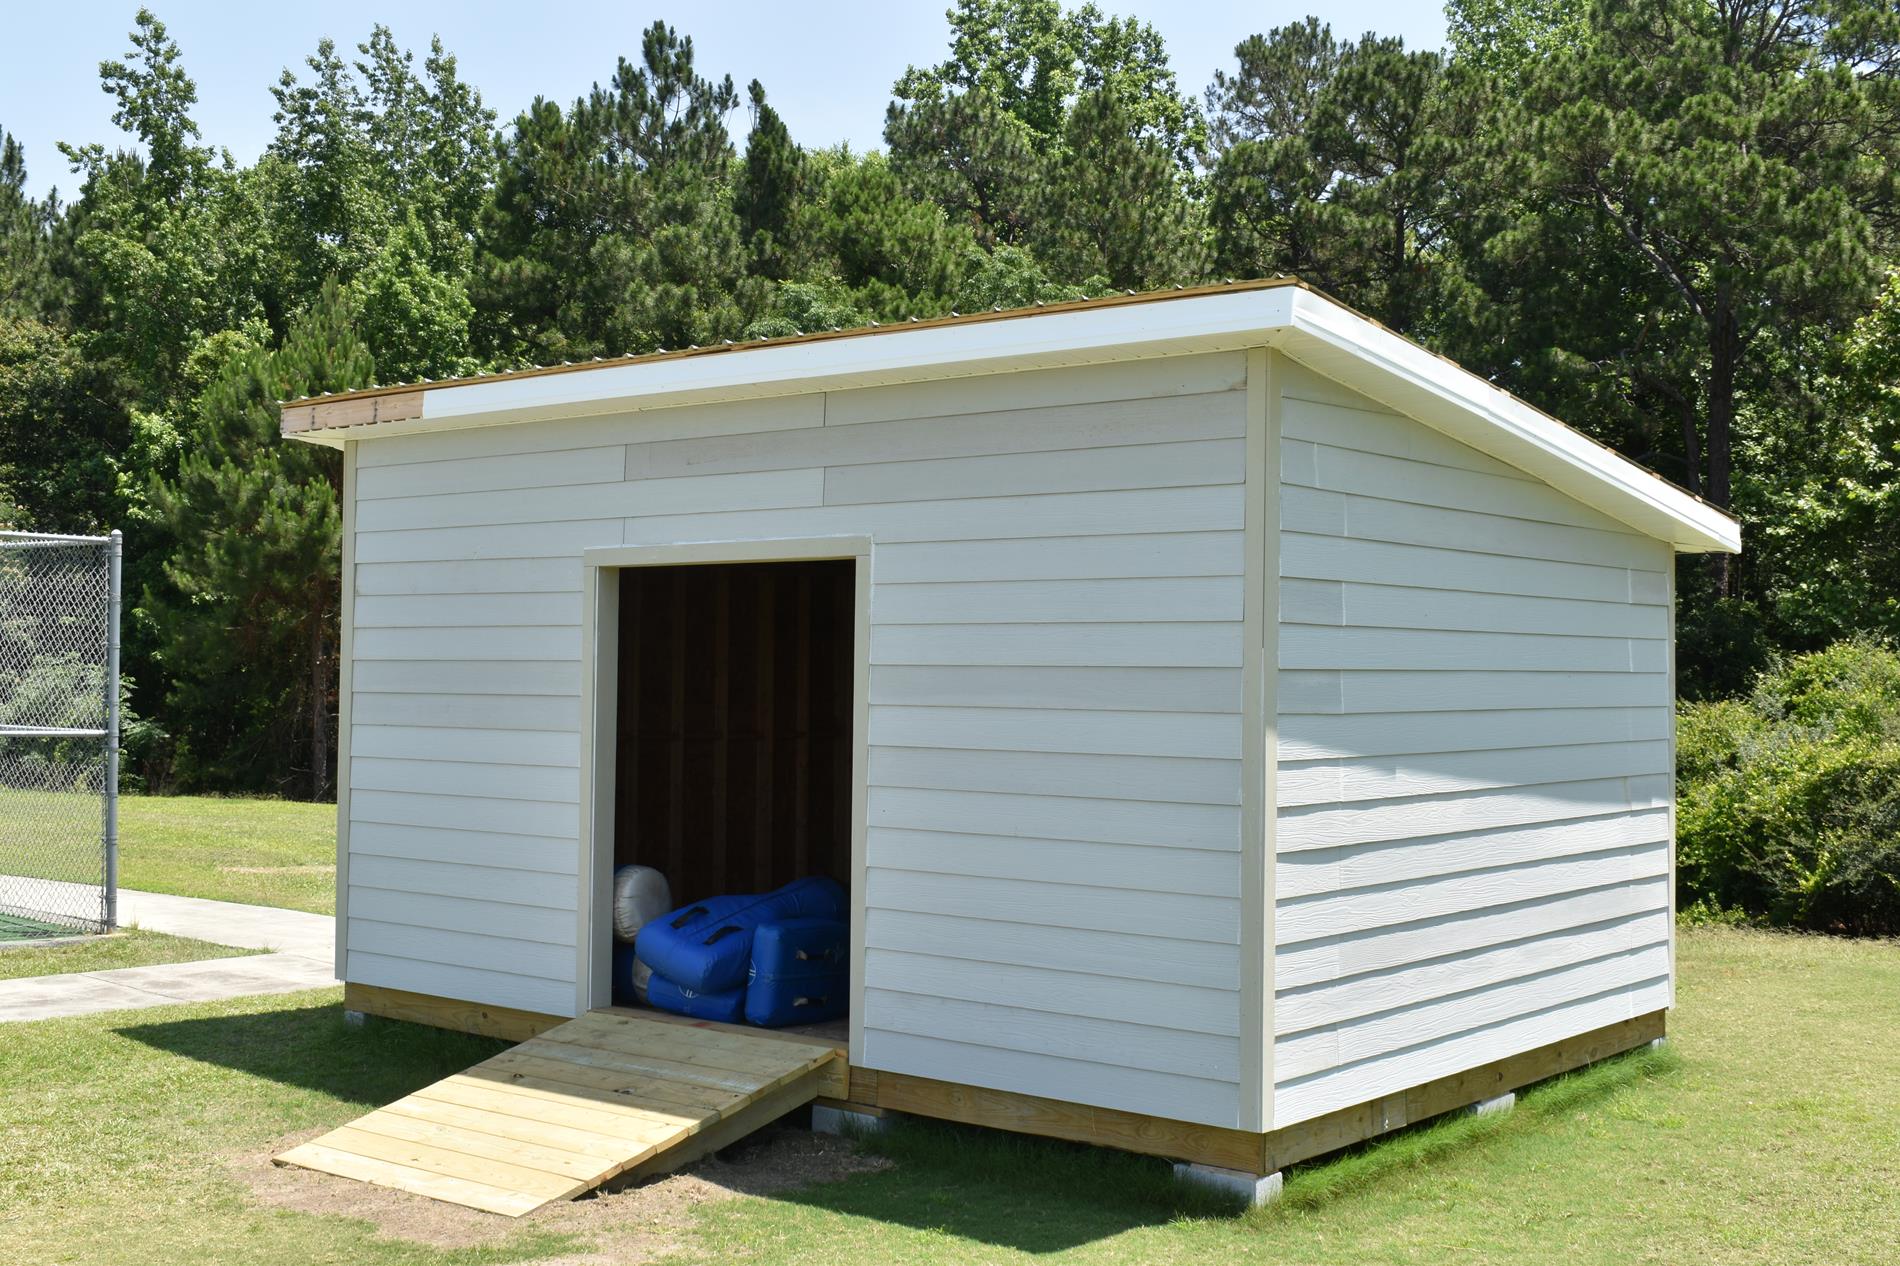 New Storage Building for Football Program